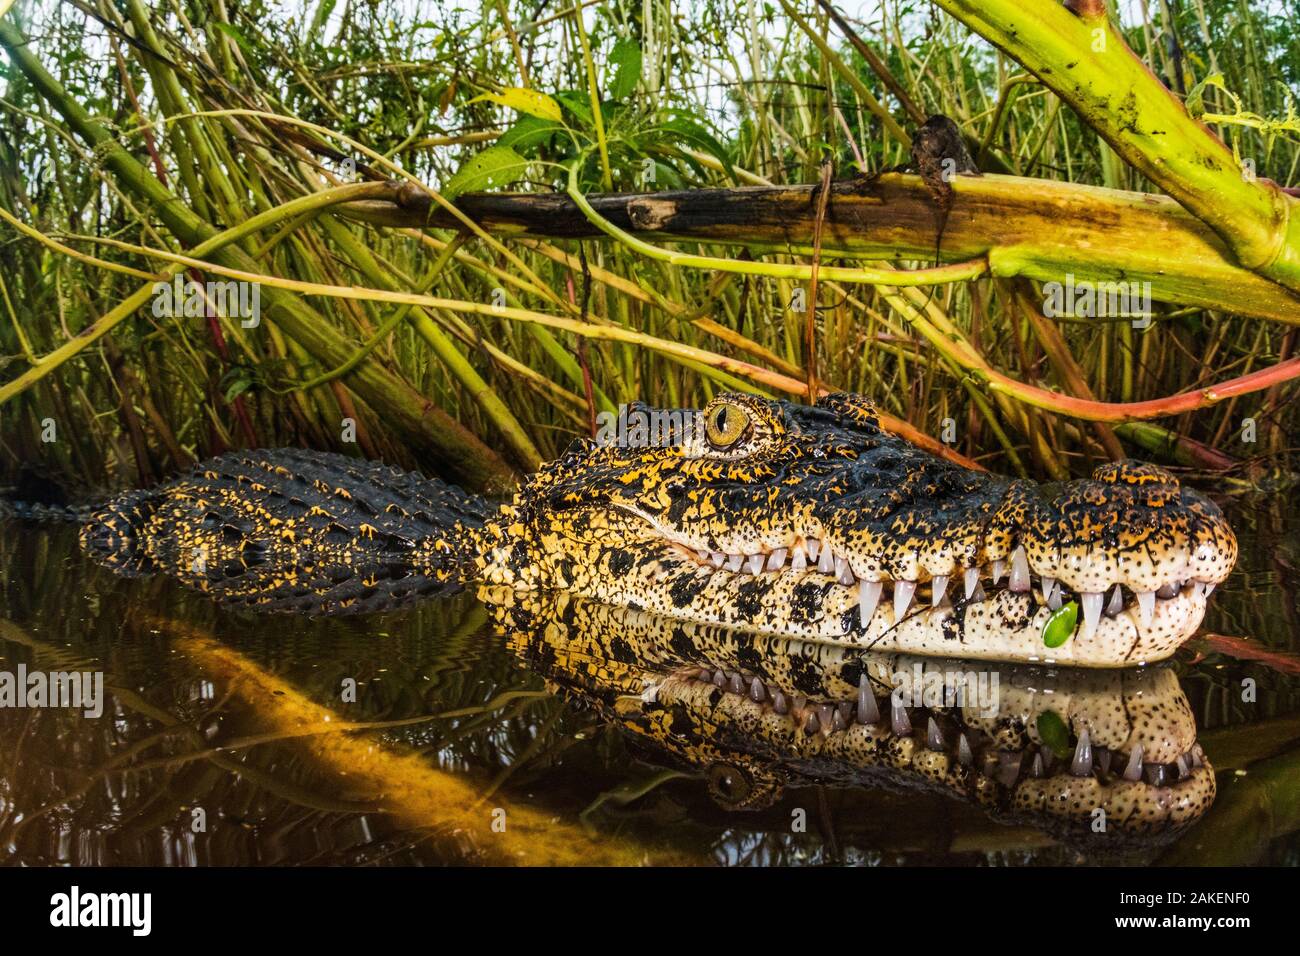 Cuban crocodile (Crocodylus rhombifer)  in a cenote in Cienaga de Zapata National Park. Cuba. Critically endangered species. Stock Photo